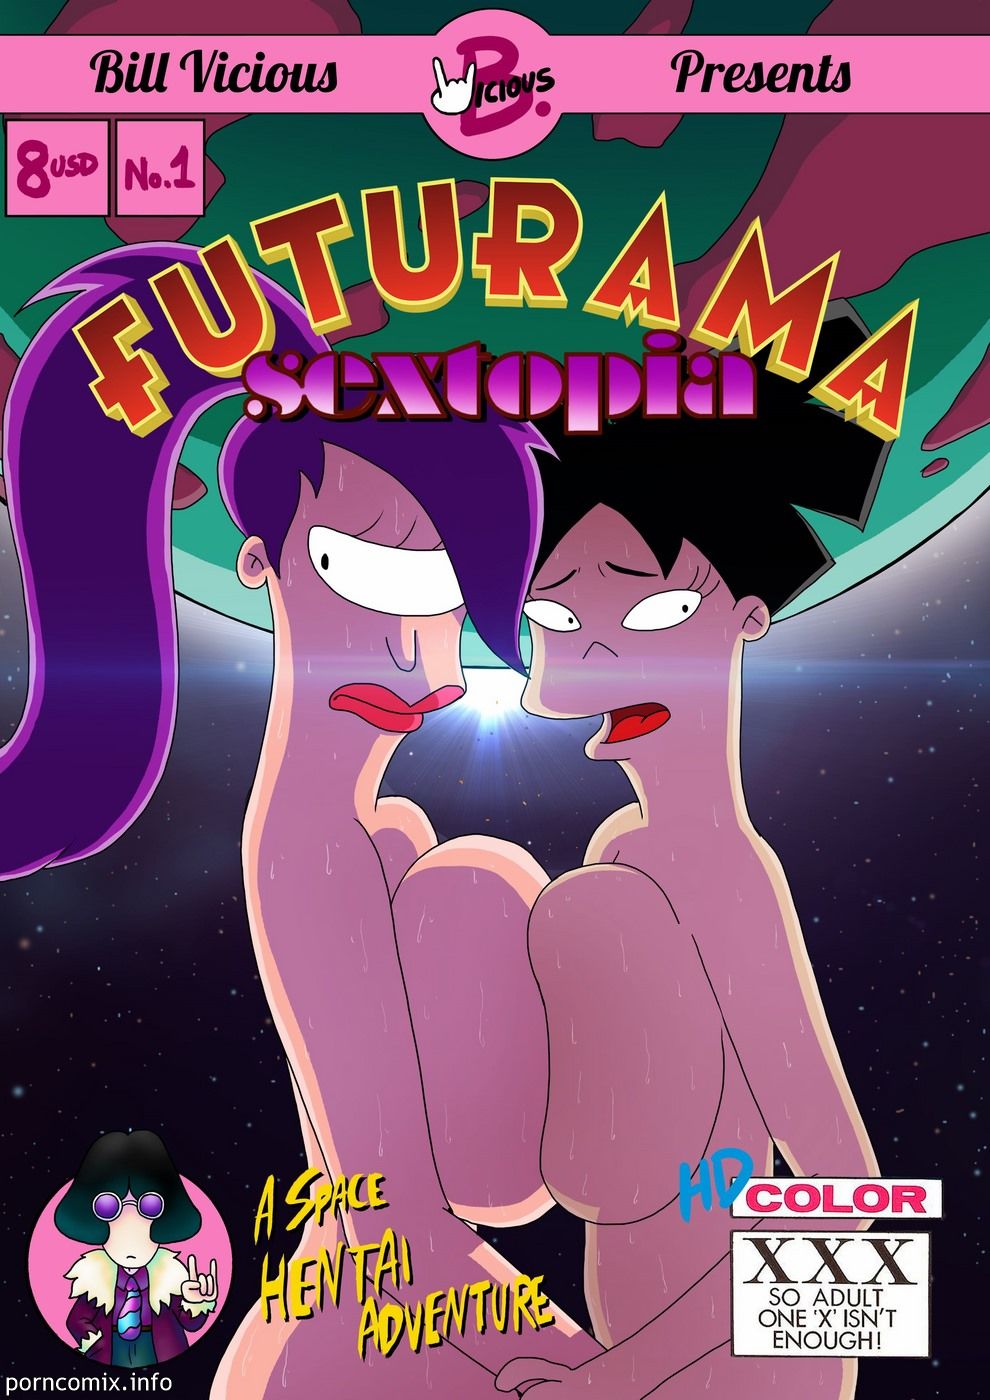 Bill Vicious - Futurama Sextopia Cartoon Sex page 1